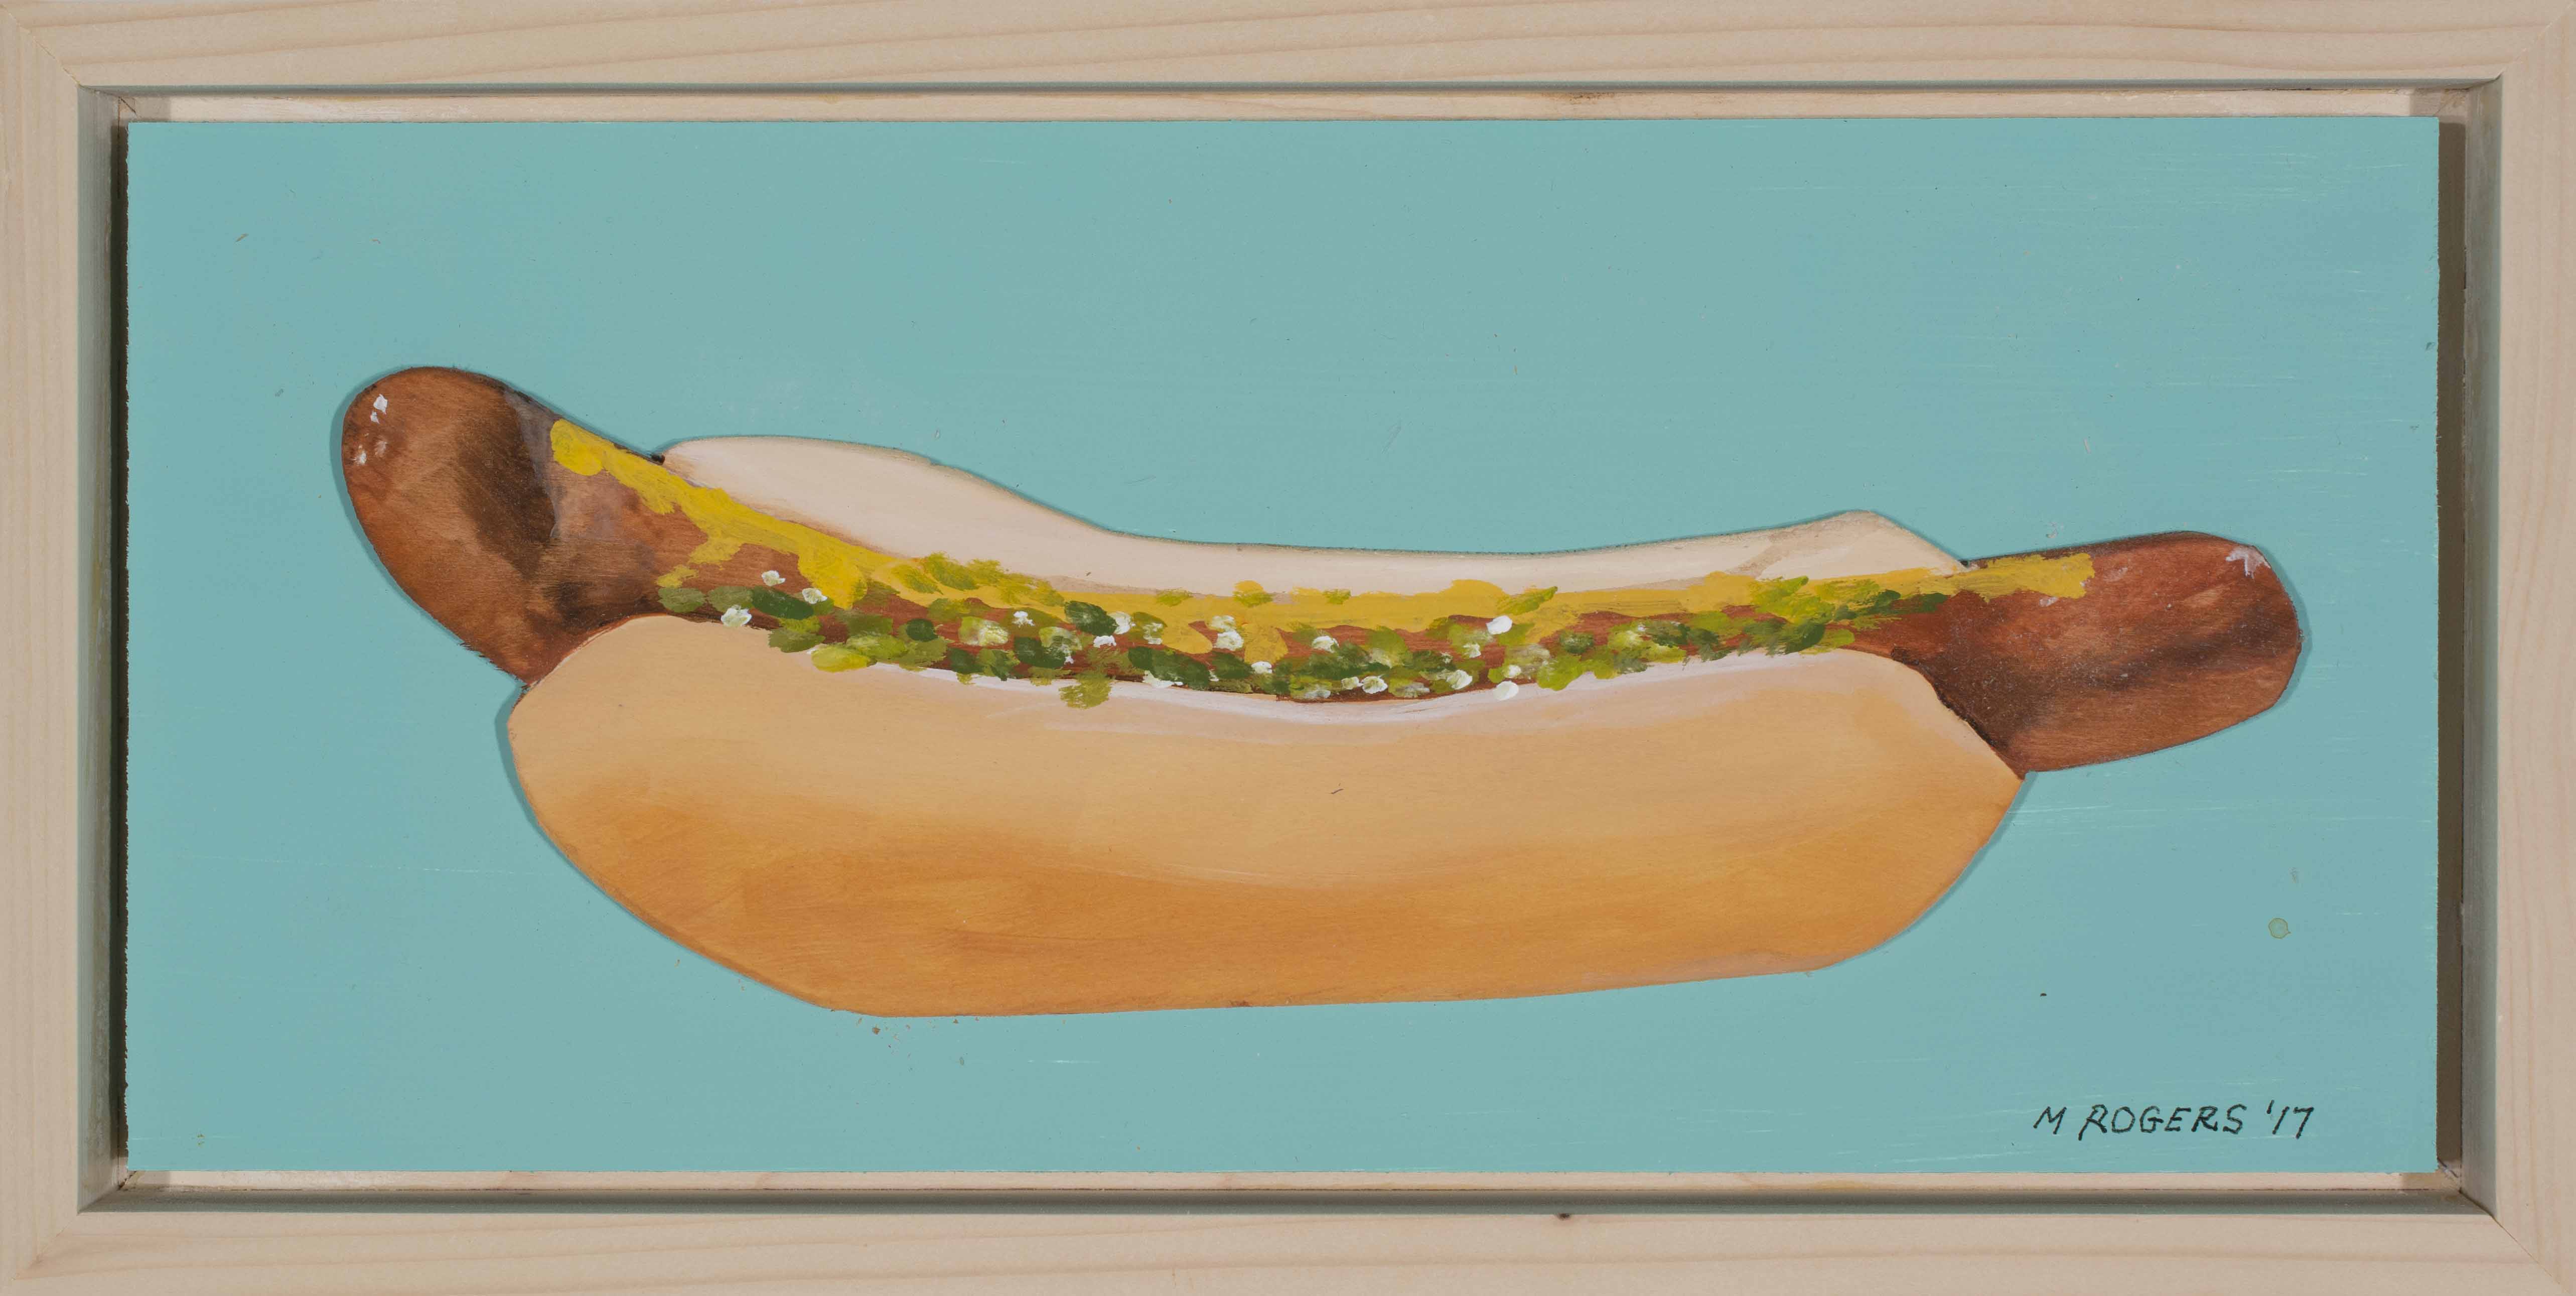 Hot Dog, 2019, acrylic on wood, 14 x 17 inches